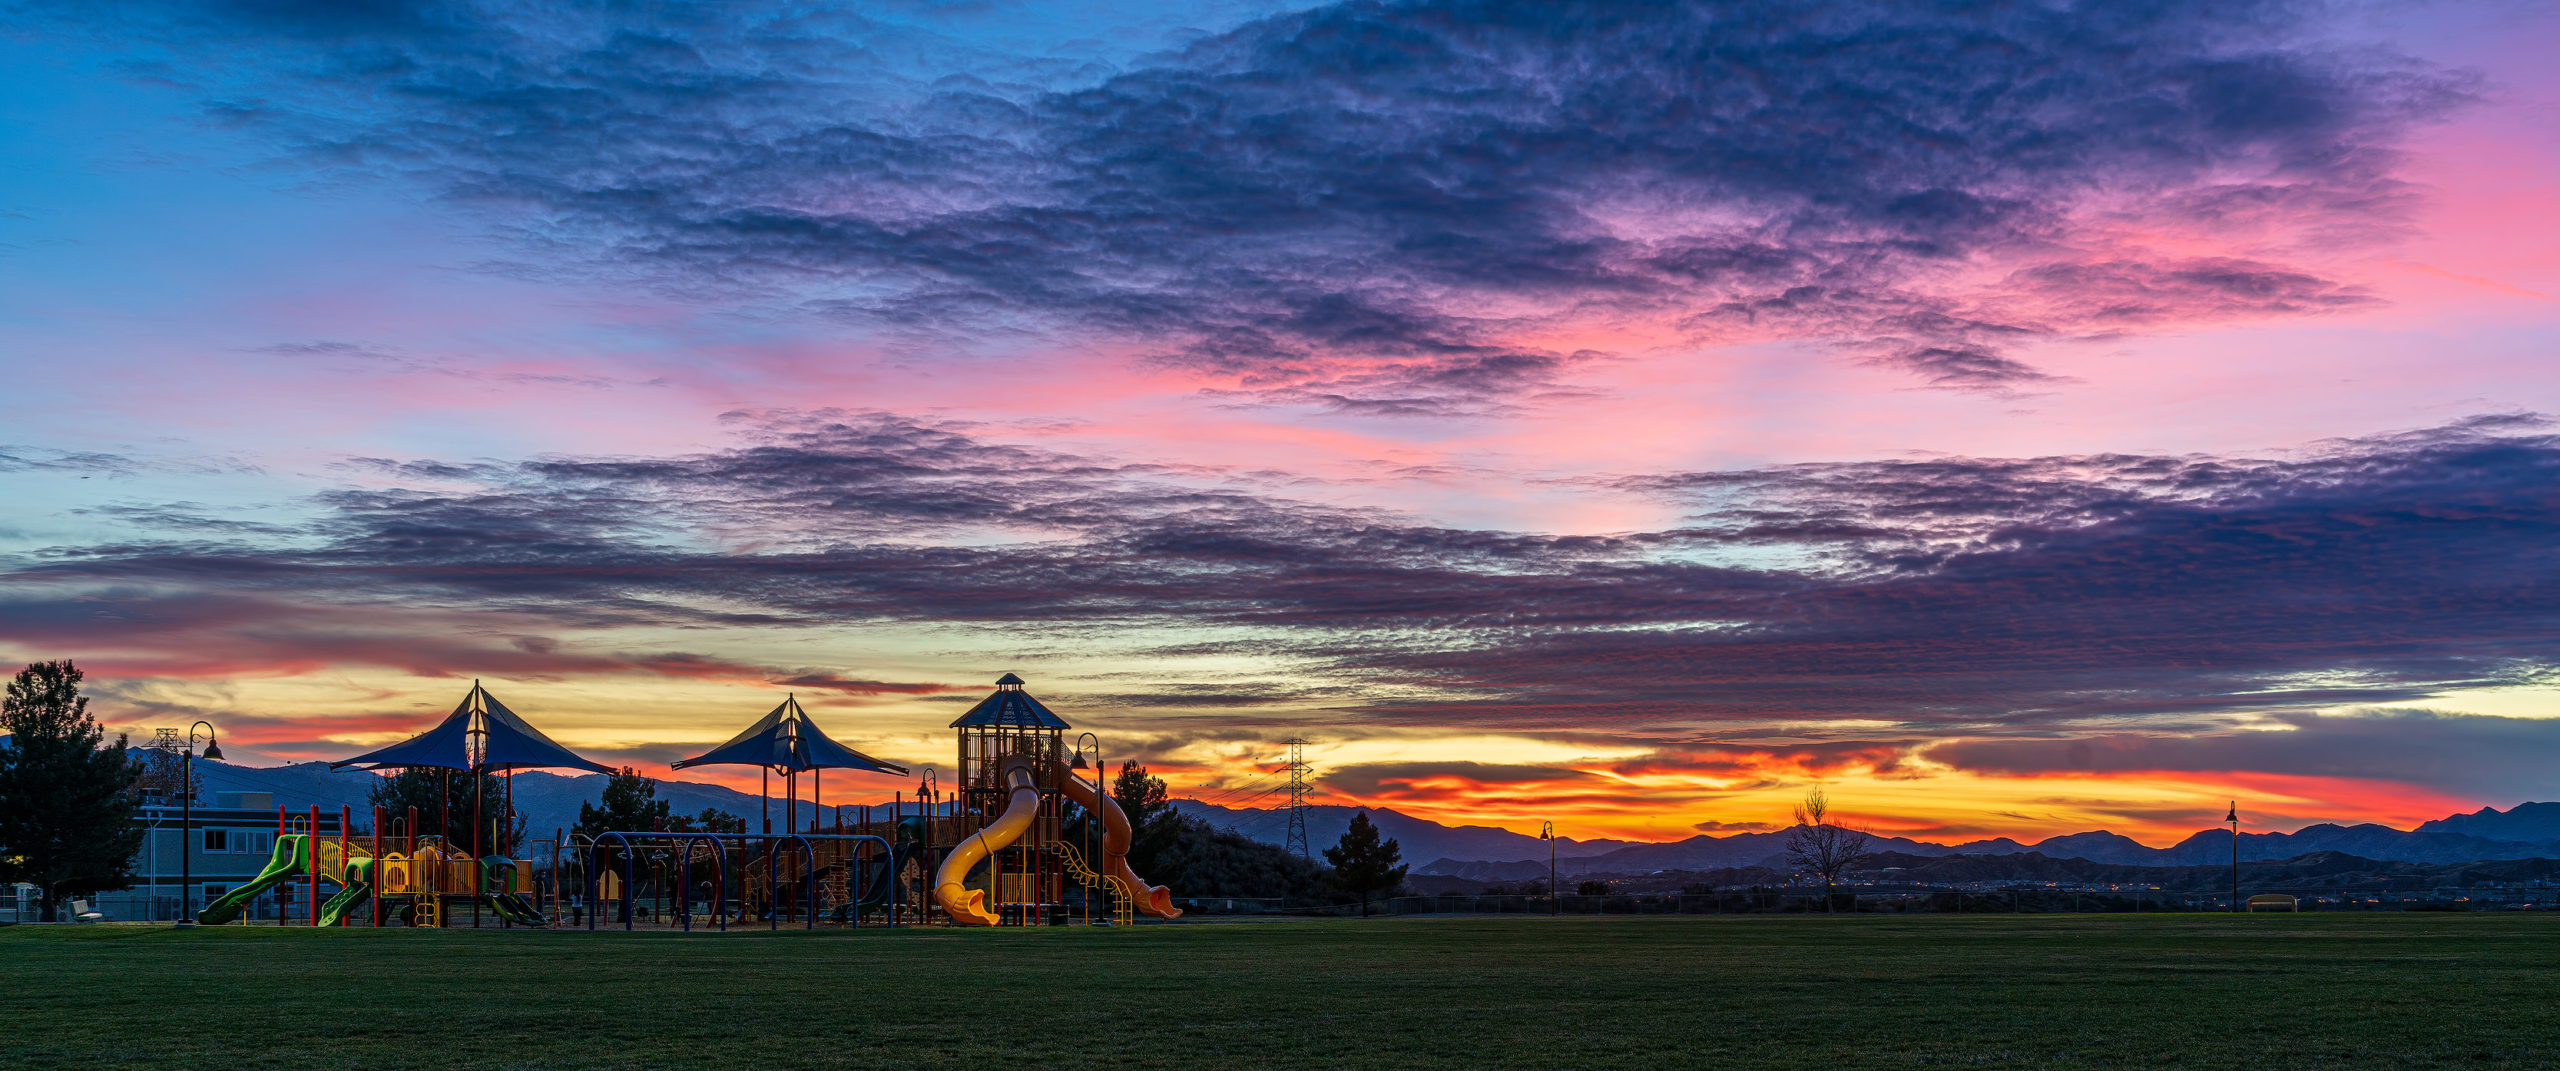 Sunset at Pacific Crest Park